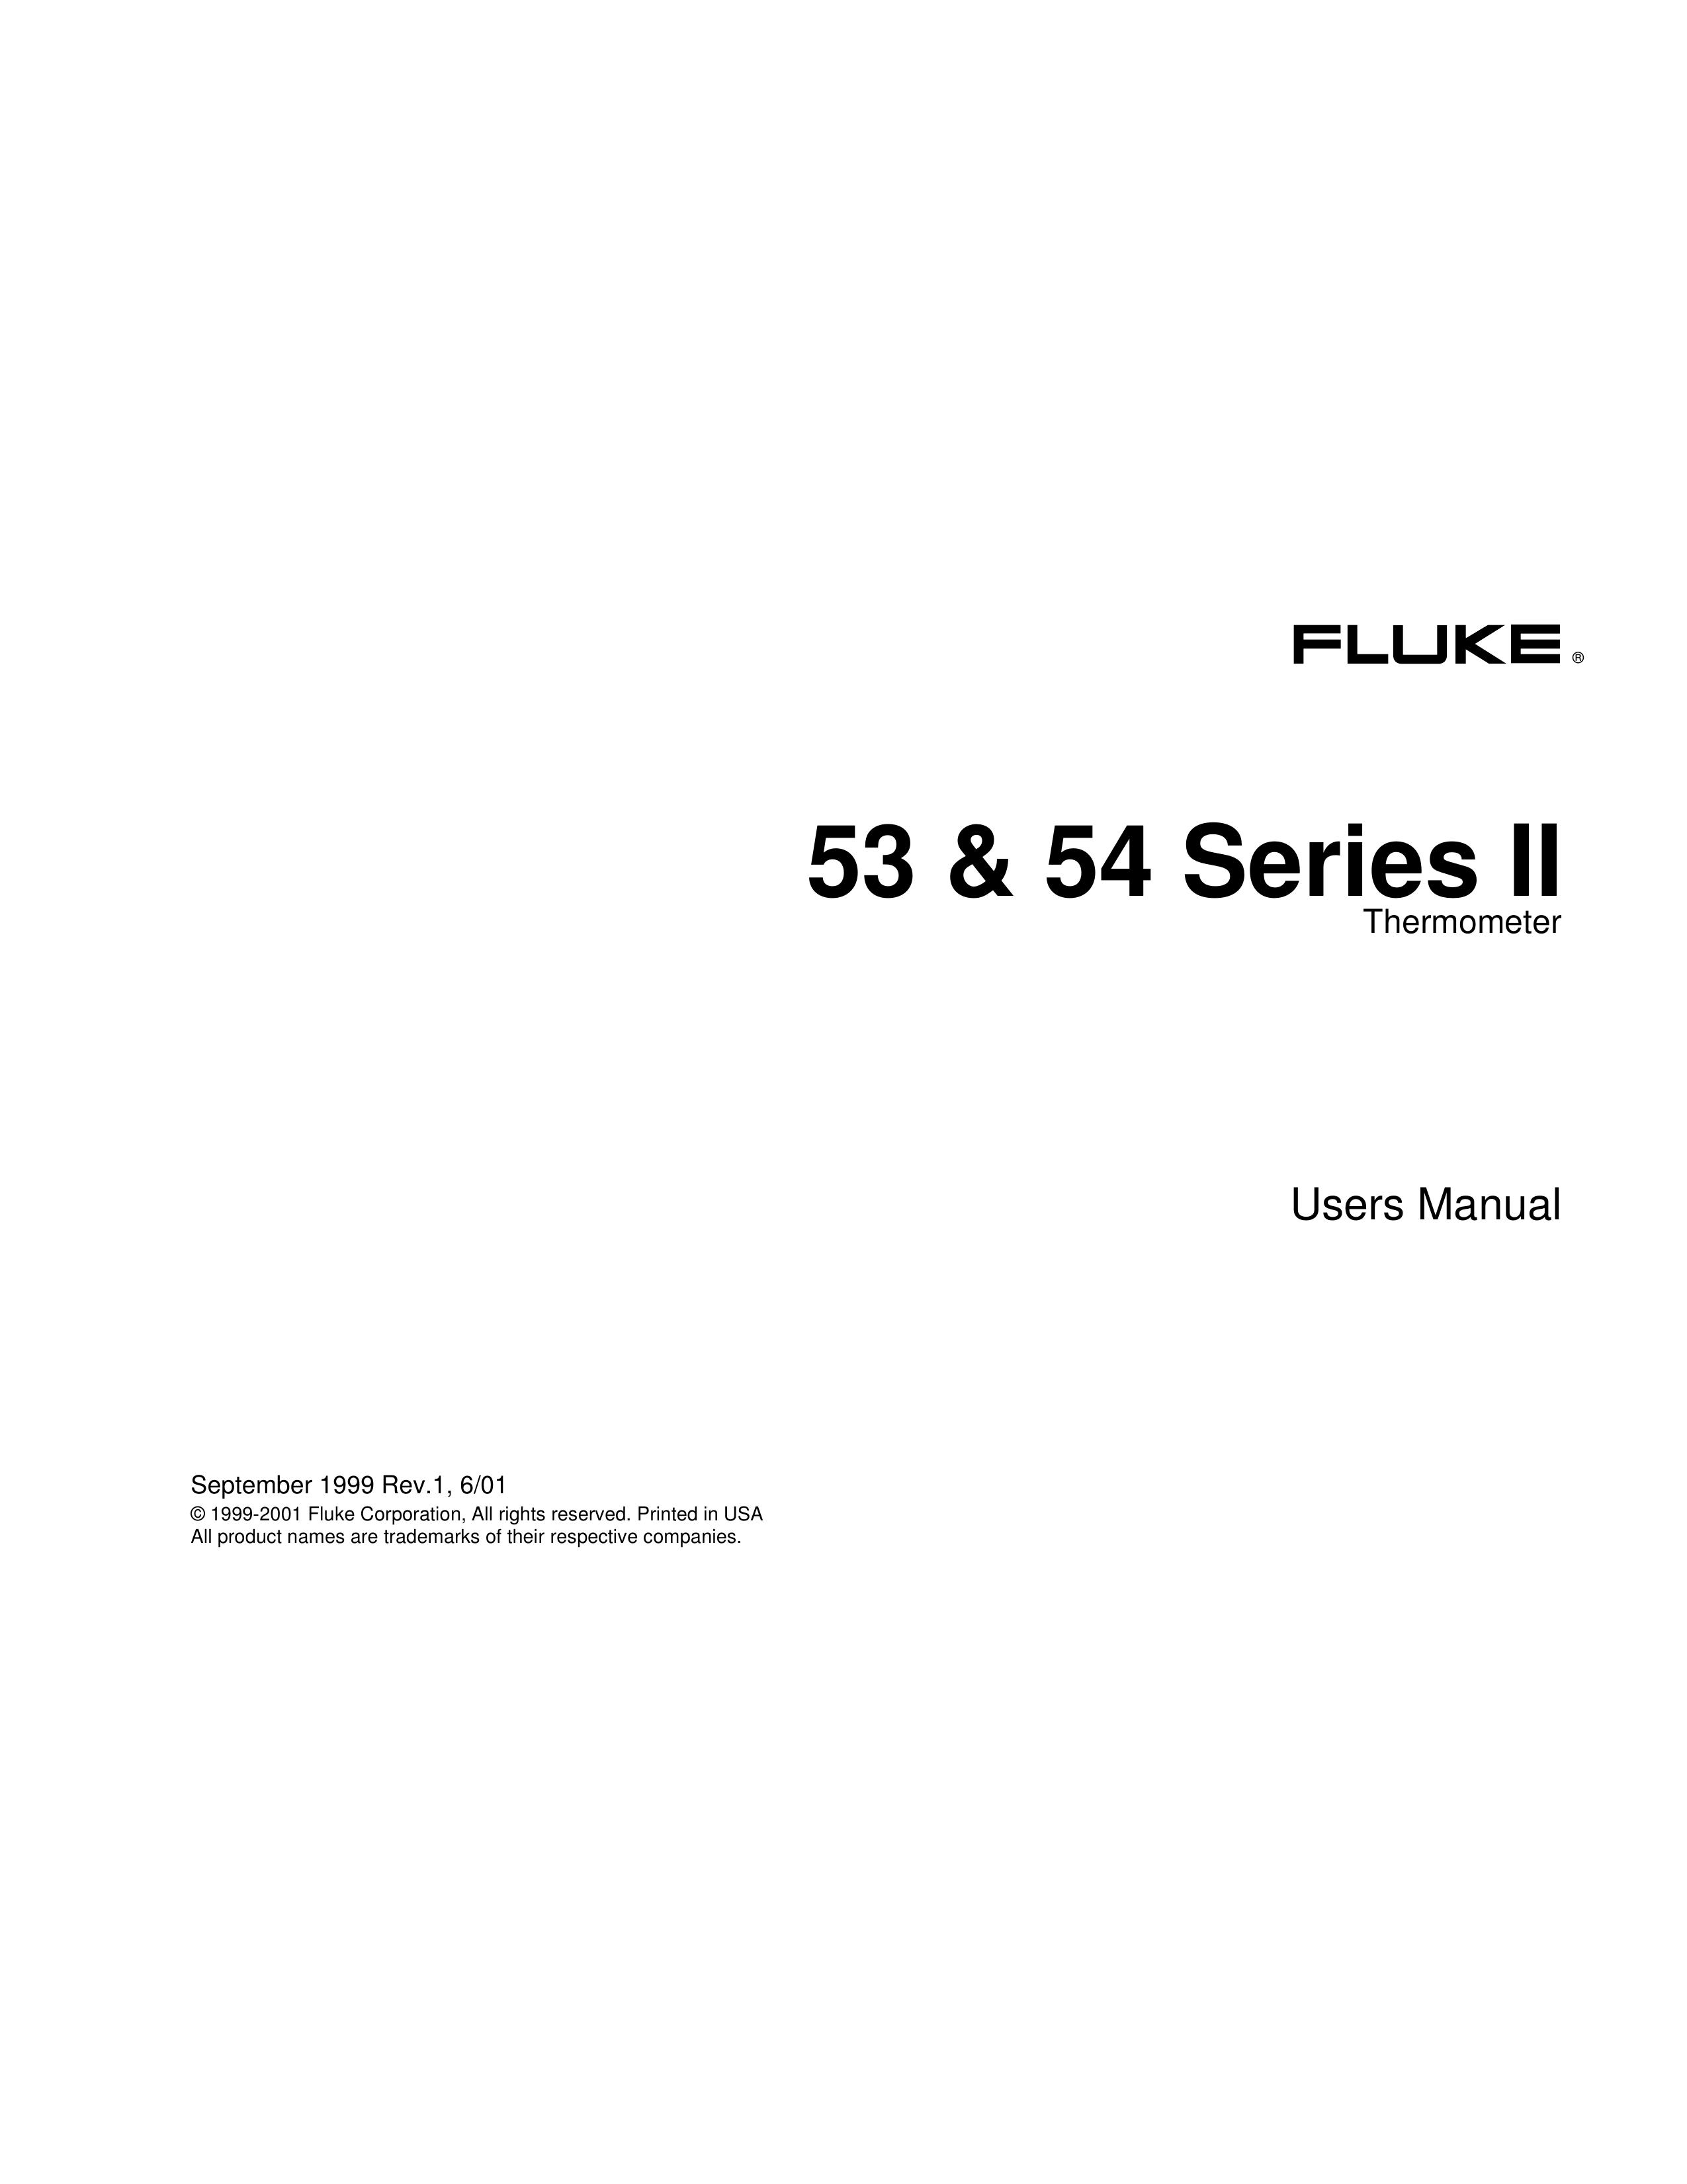 Fluke 53 & 54 Series Thermometer User Manual